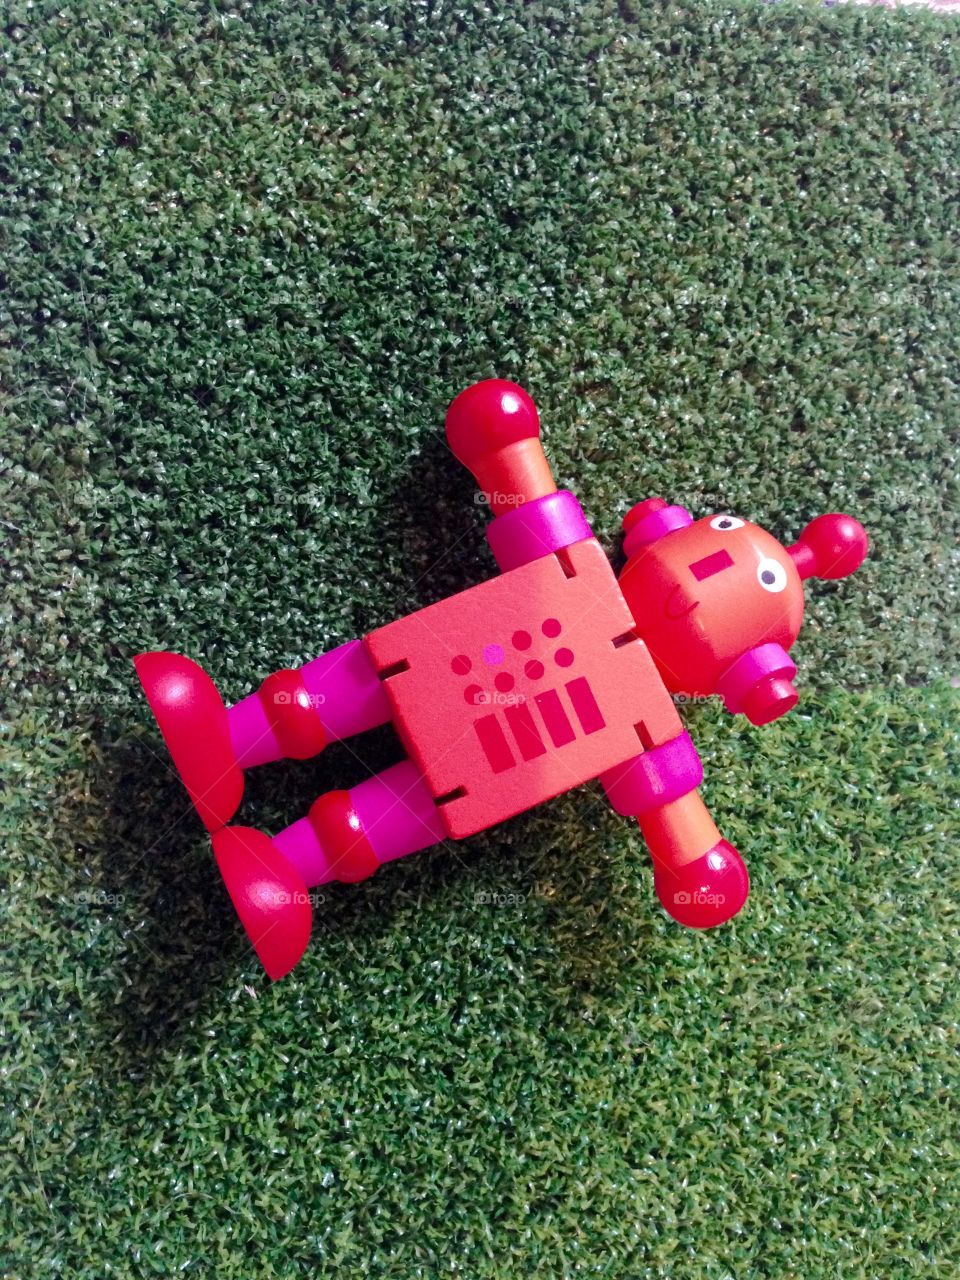 Toy robot left behind in garden 